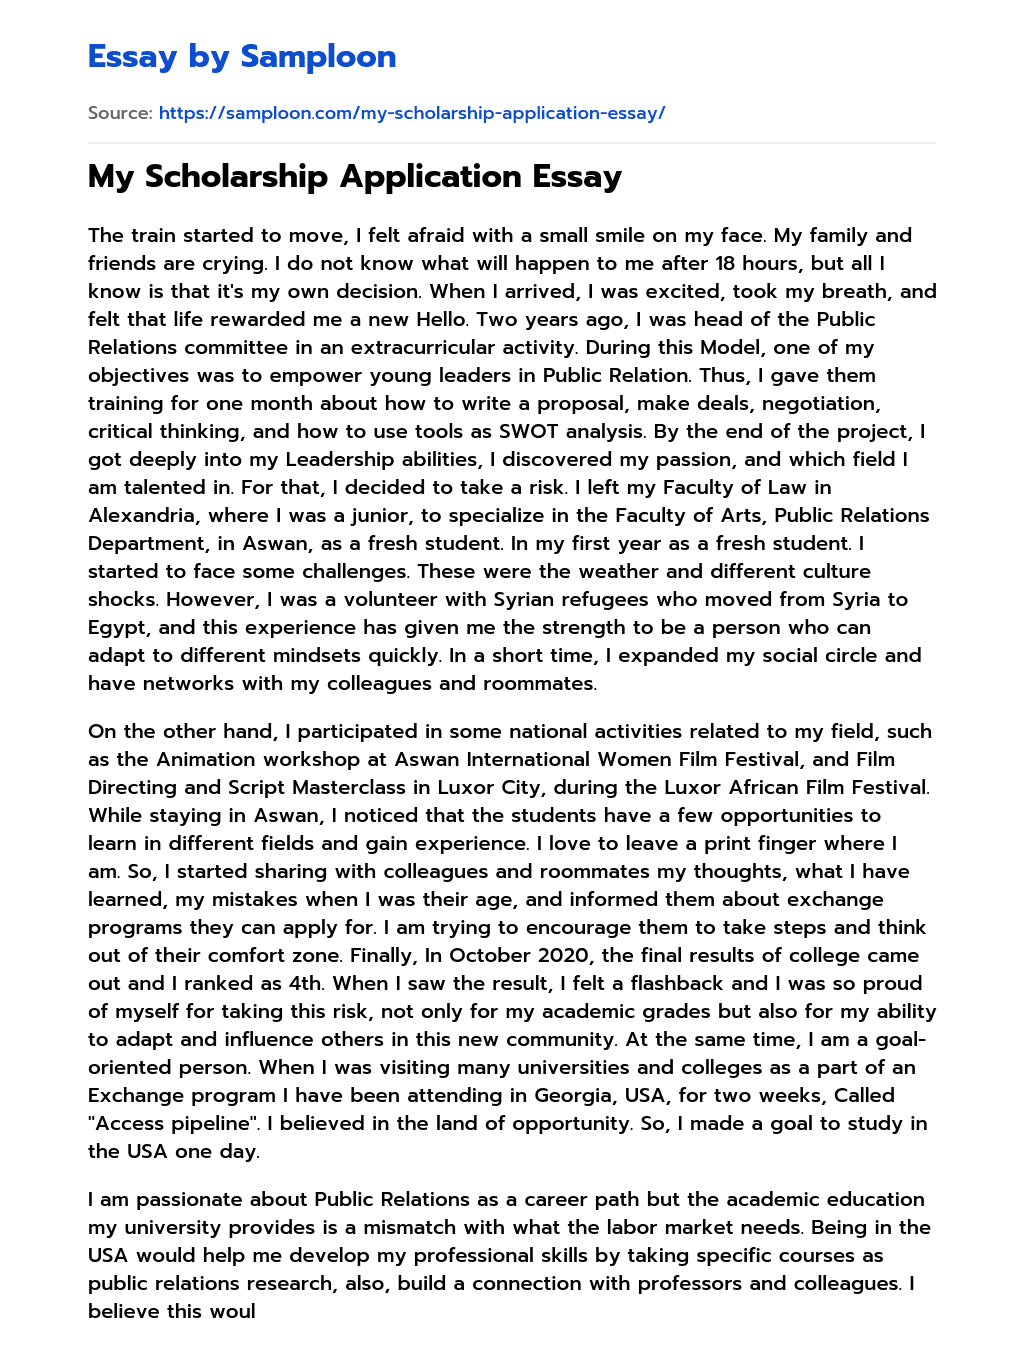 My Scholarship Application Essay essay